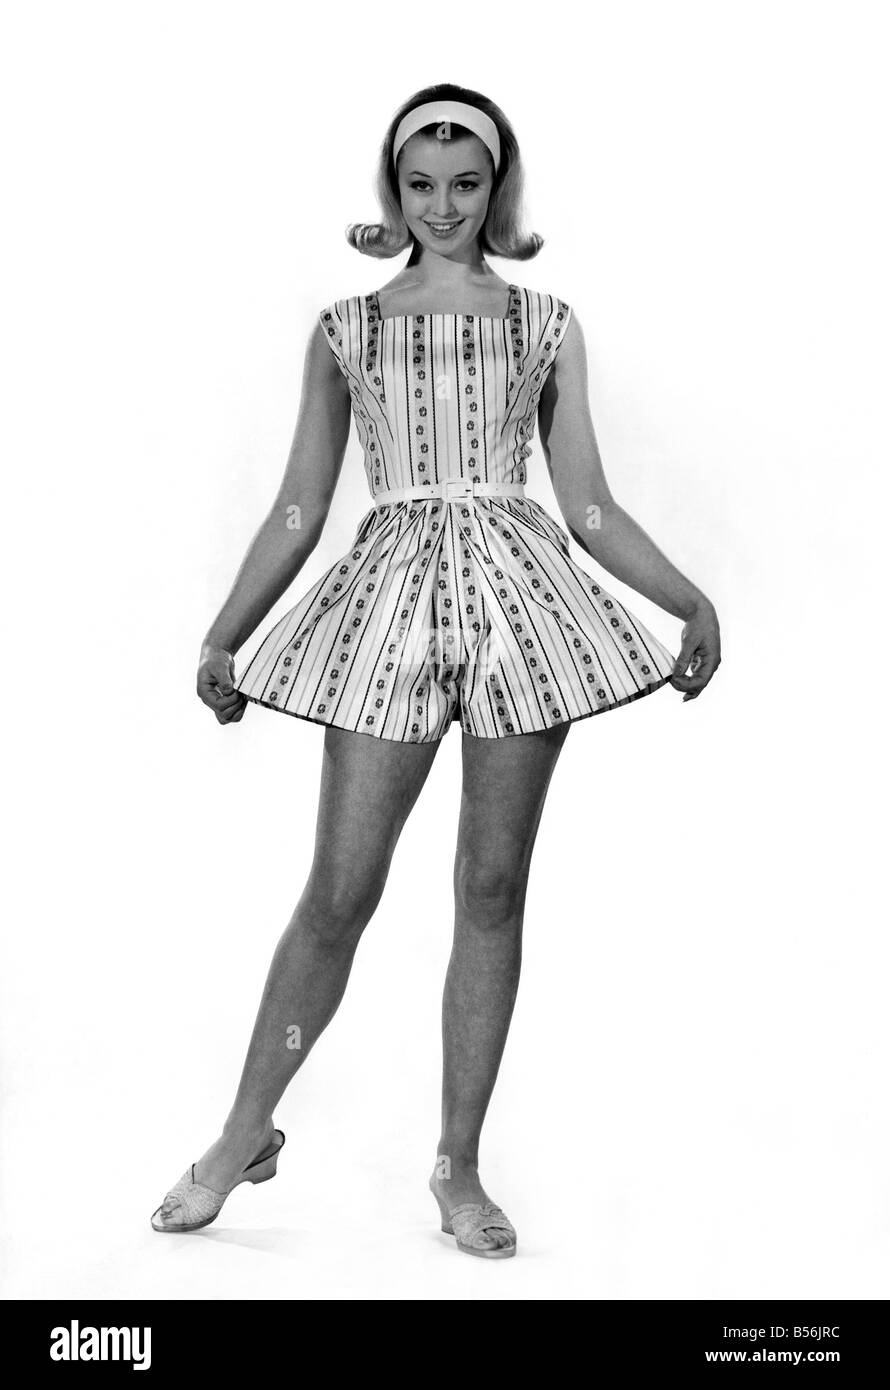 Reveille Fashions. Susie Scott. April 1960 P008974 Stock Photo - Alamy